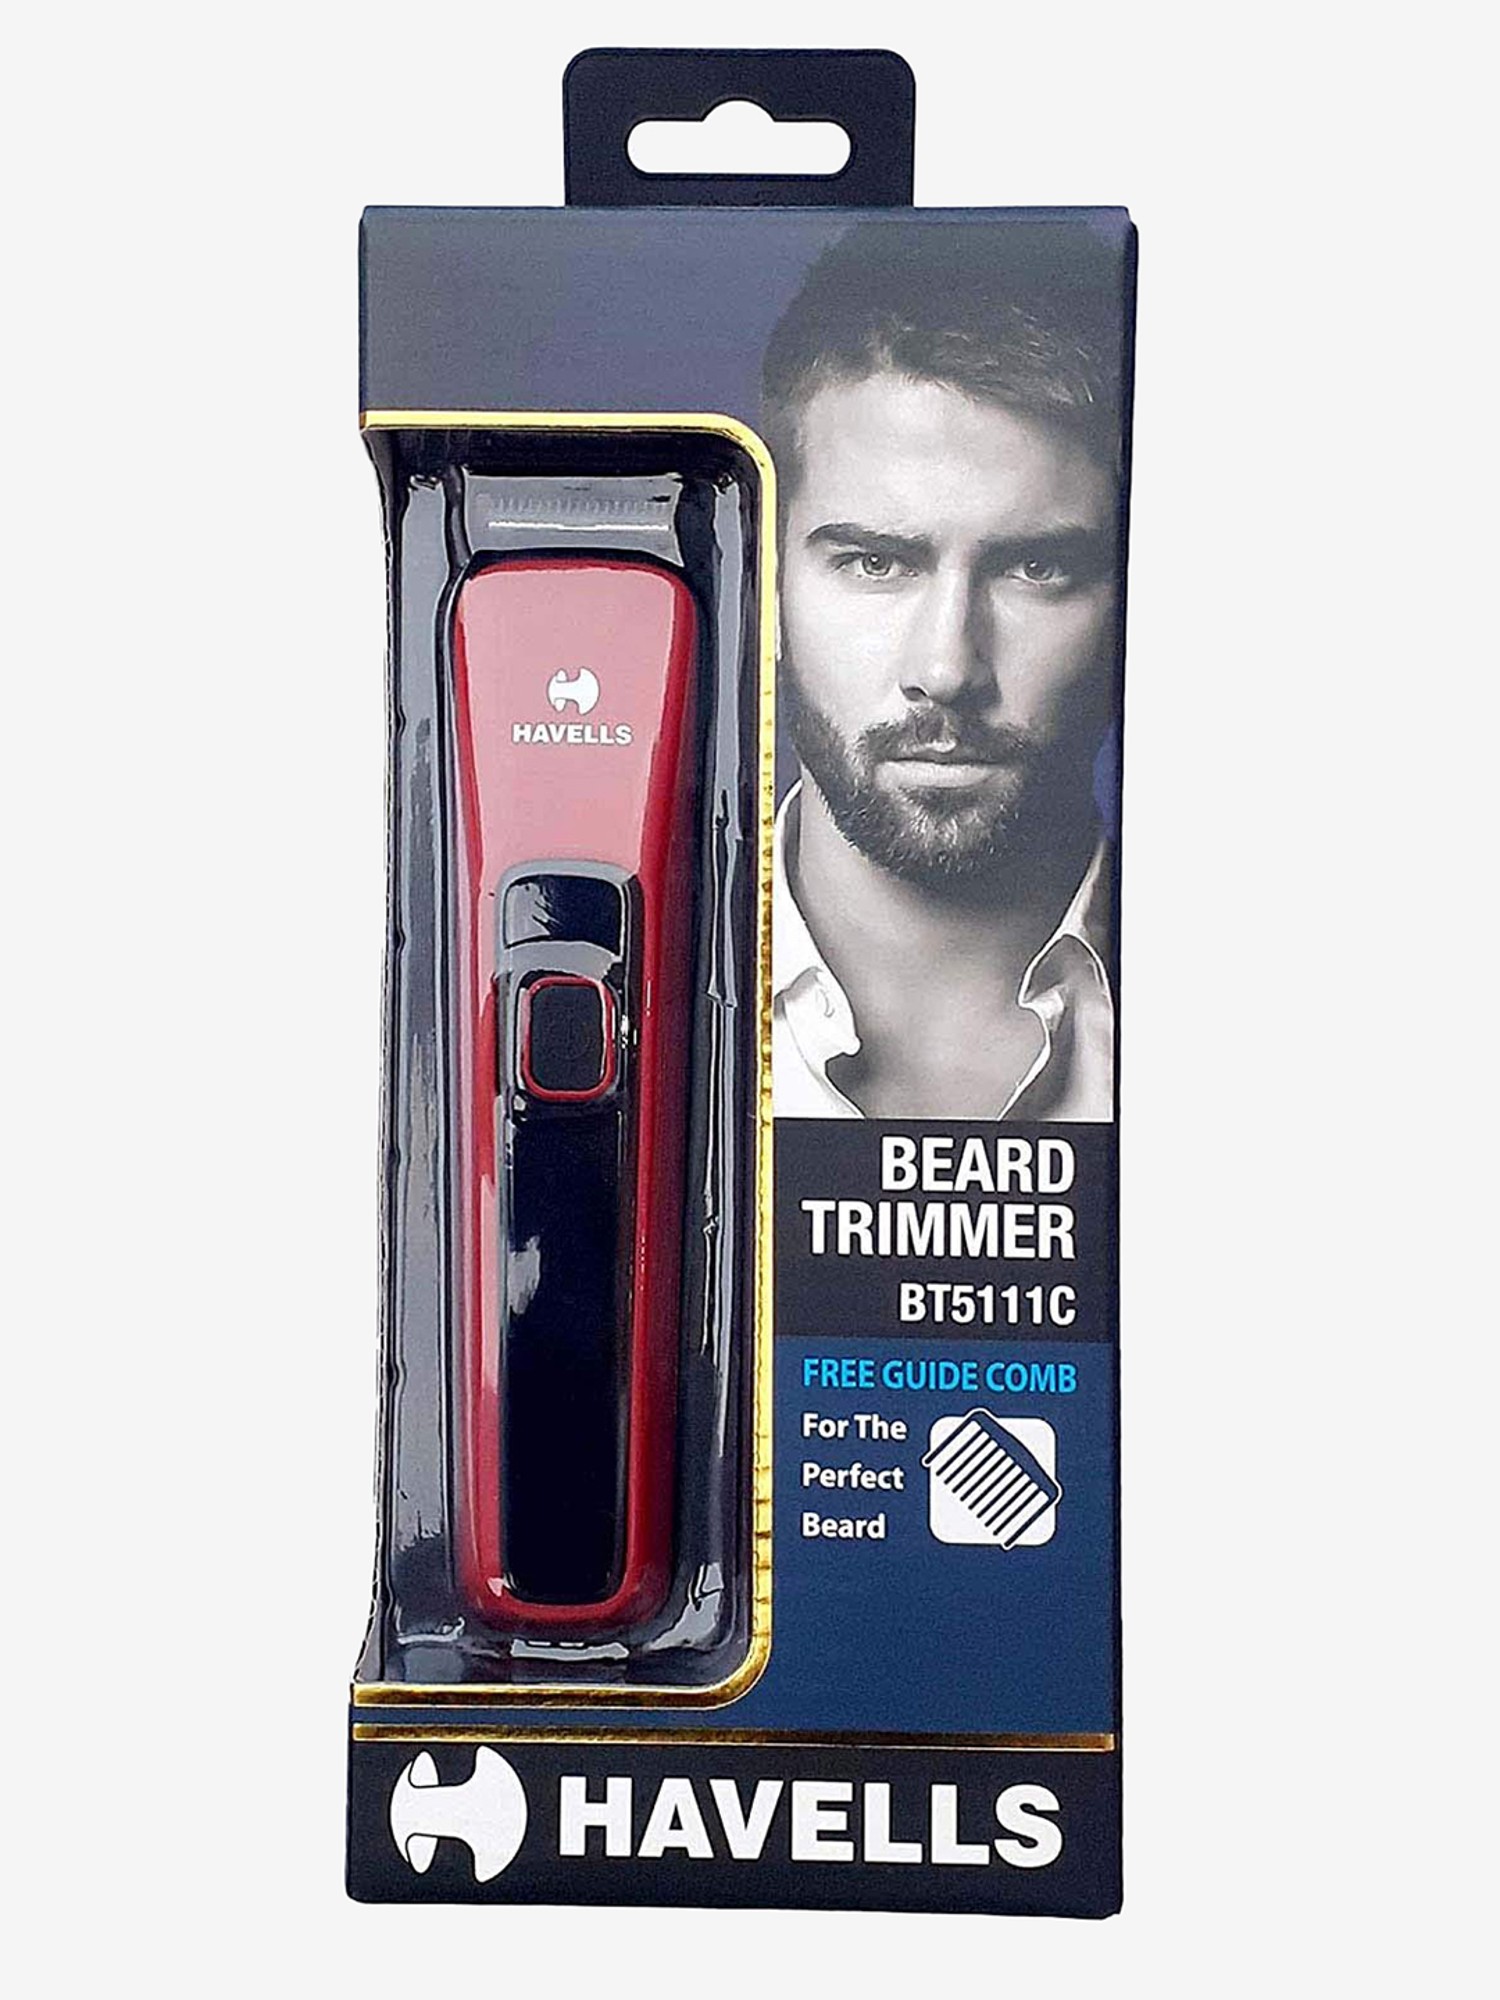 havells beard trimmer price